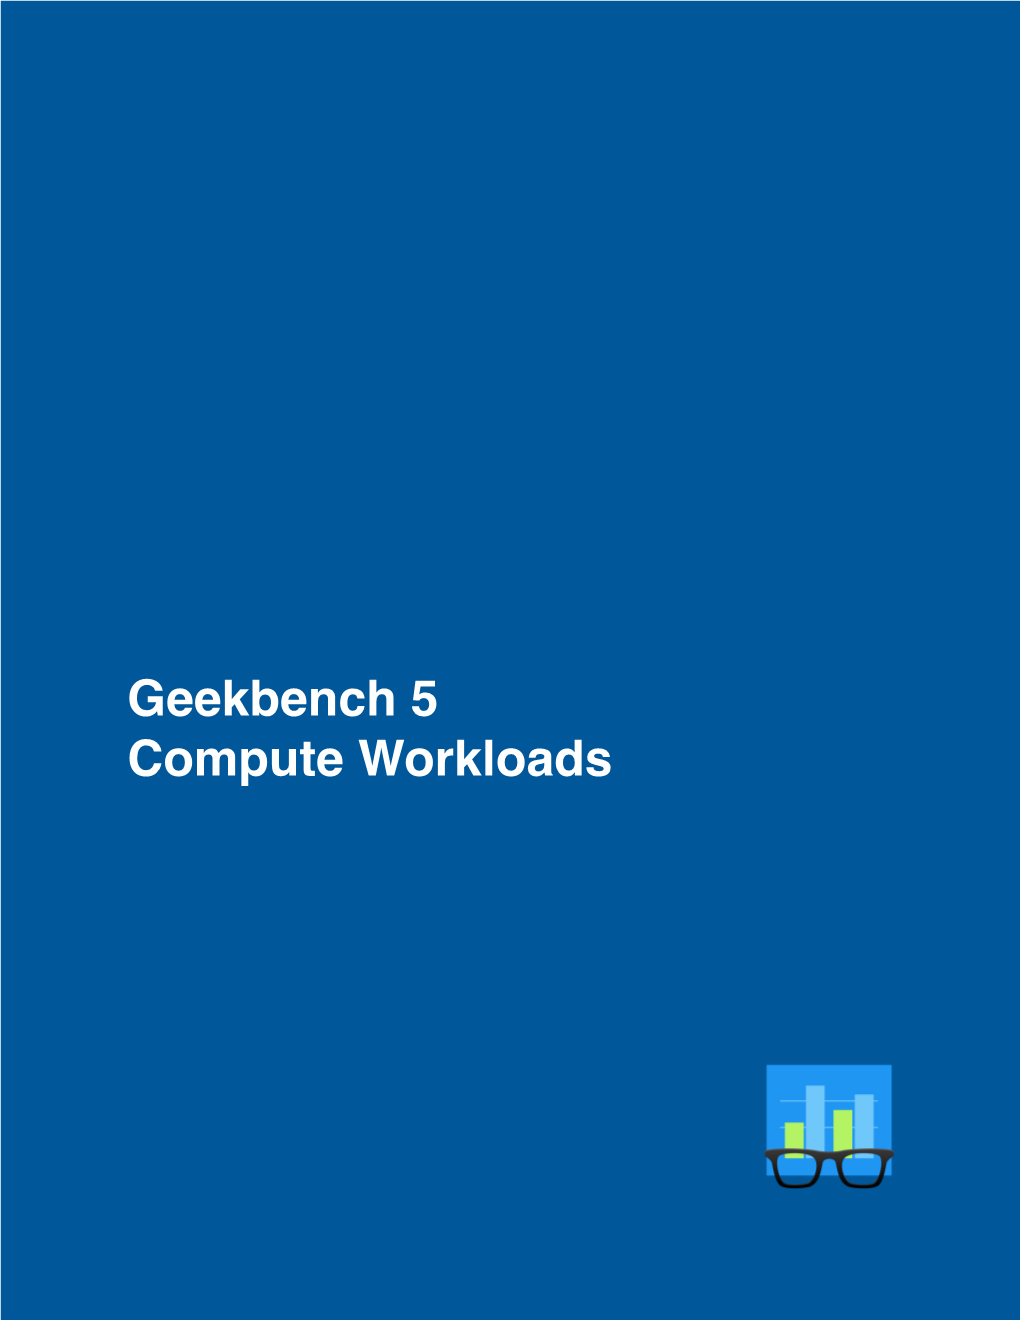 Geekbench 5 Compute Workloads